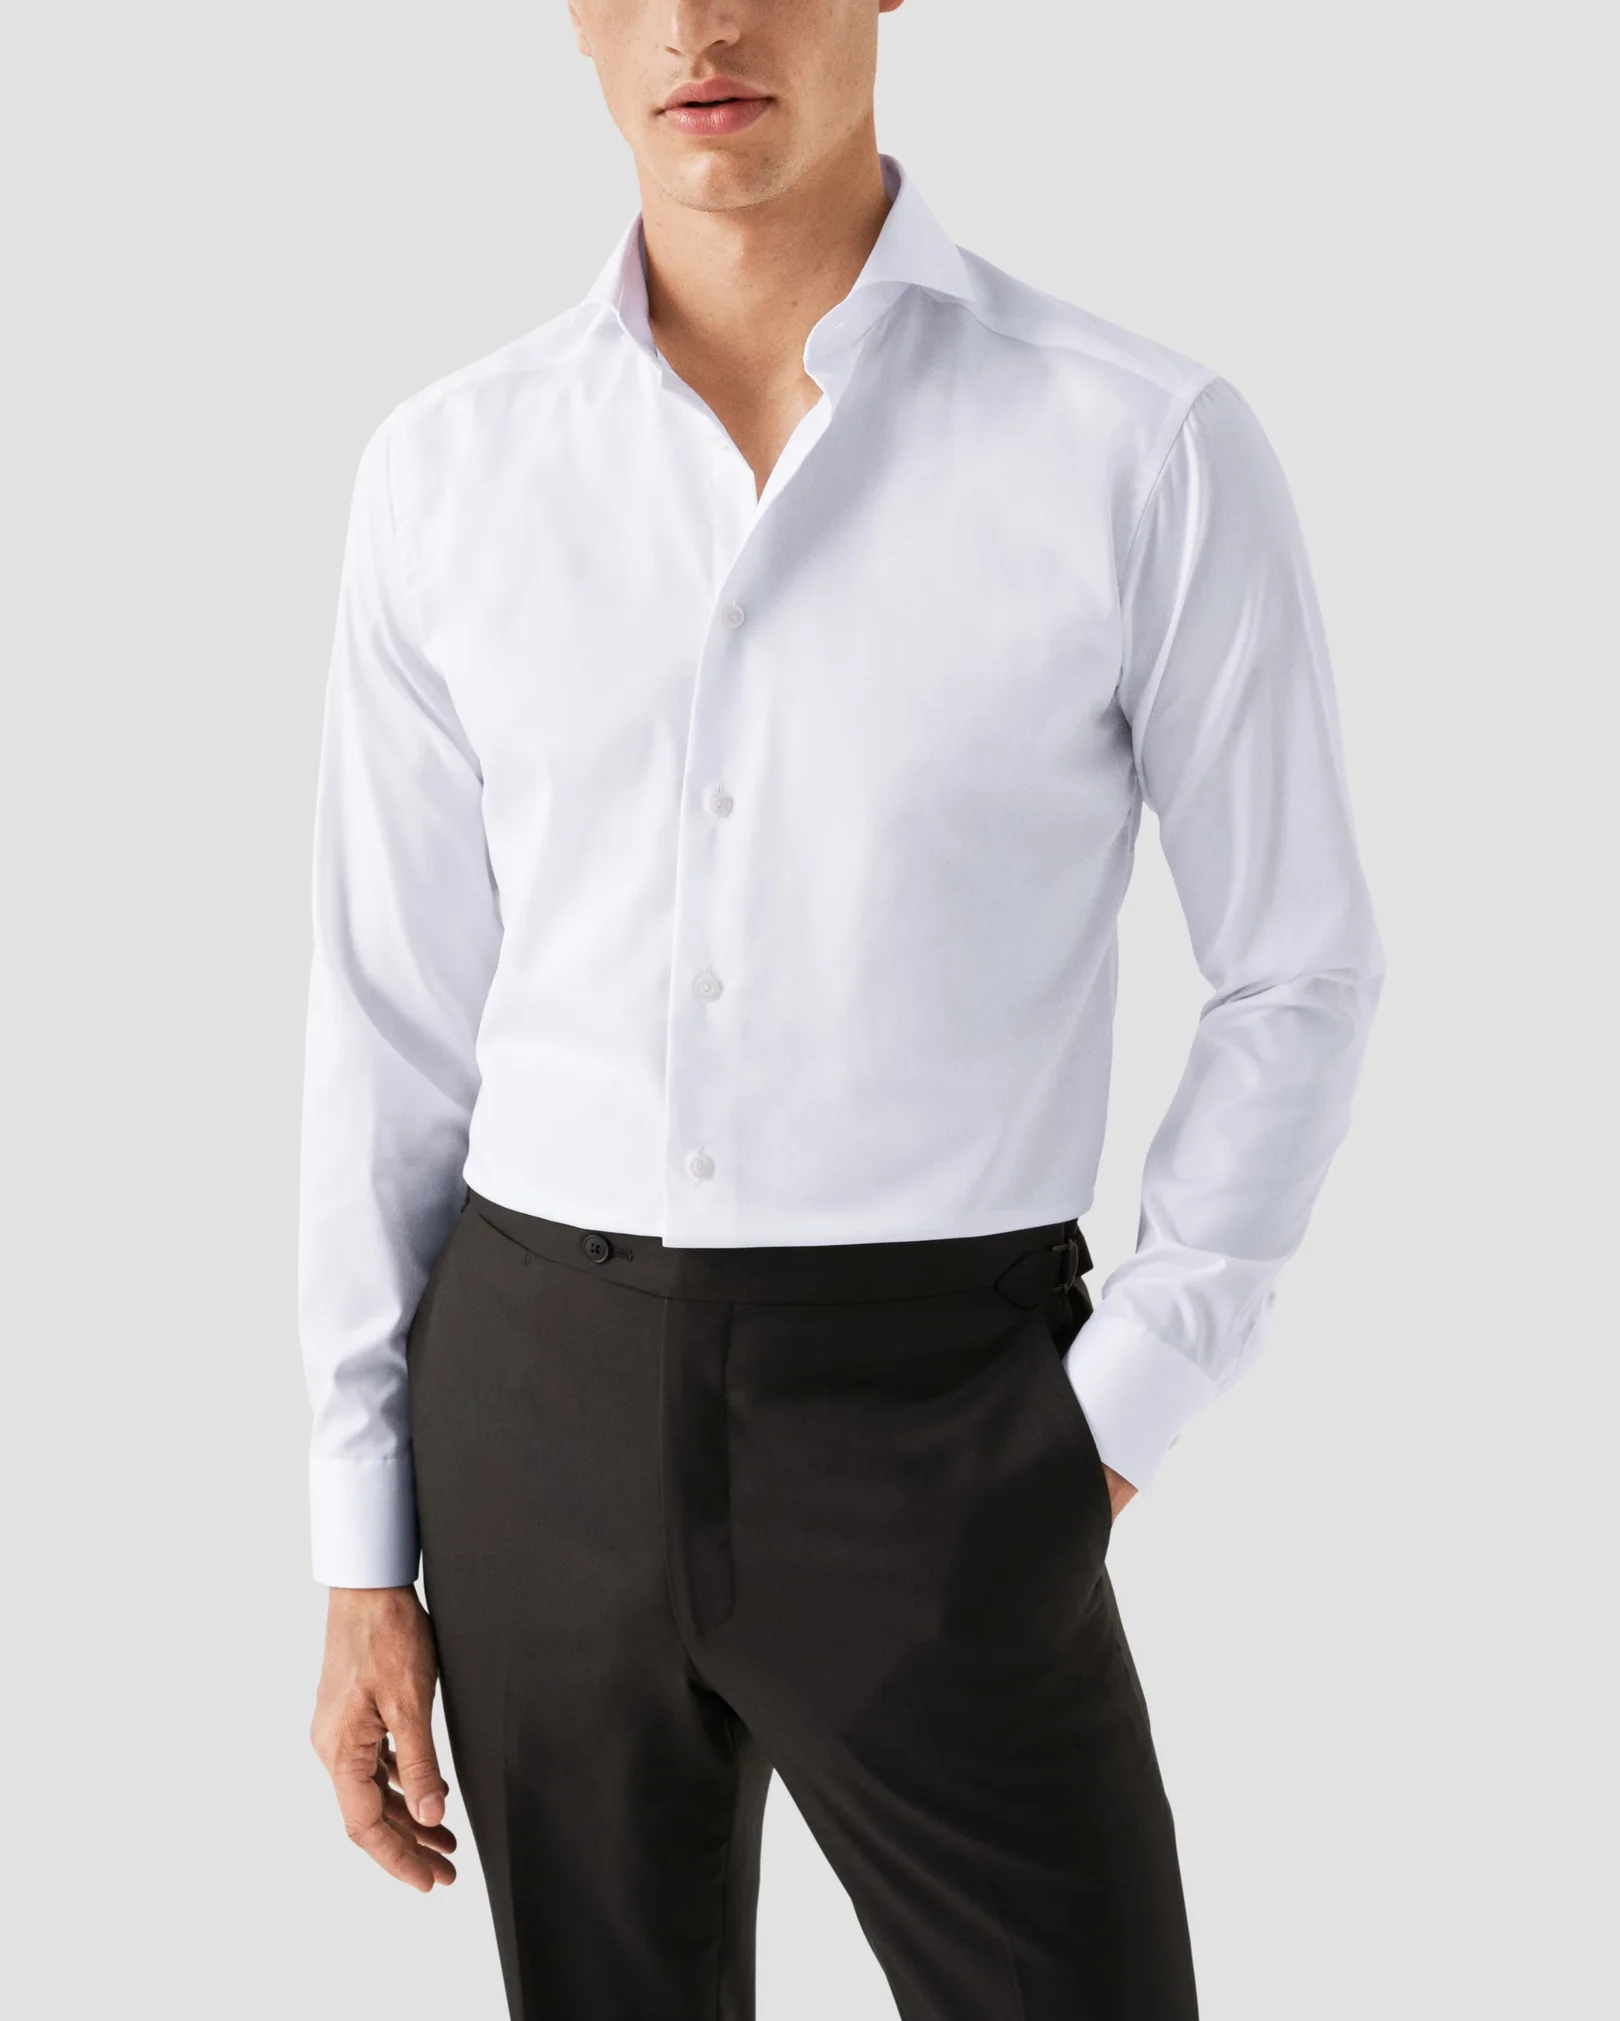 Eton - white extreme cut away shirt